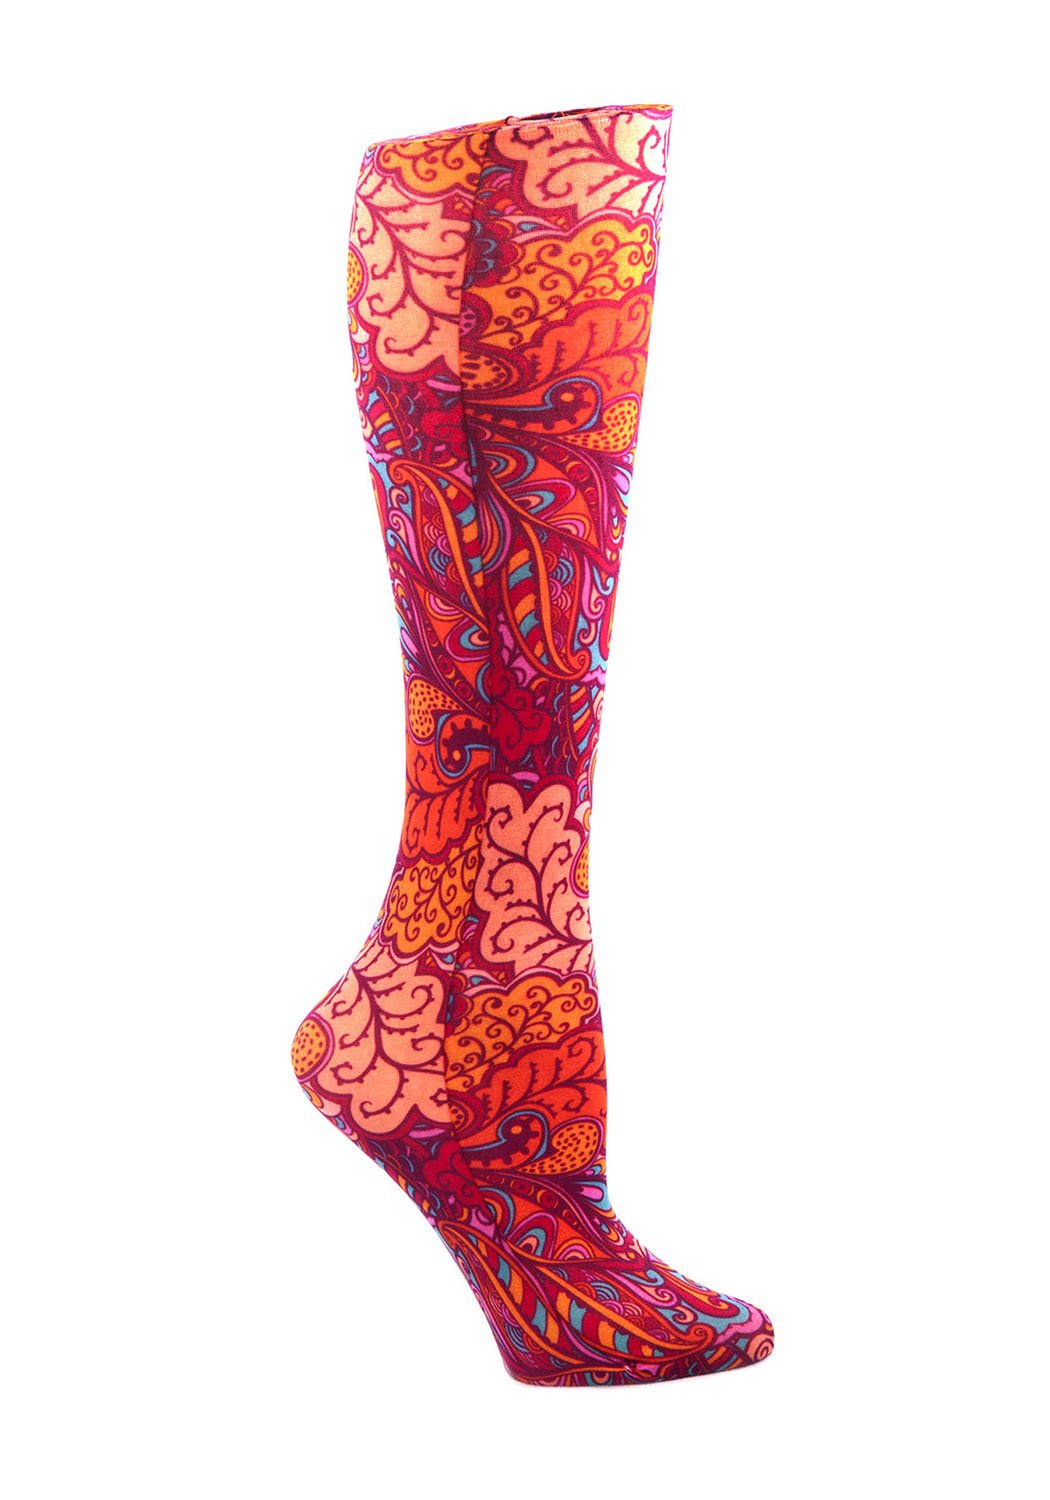 Celeste Stein Therapeutic Compression Socks, Bright Vintage Floral, 8-15 mmHg, Mild